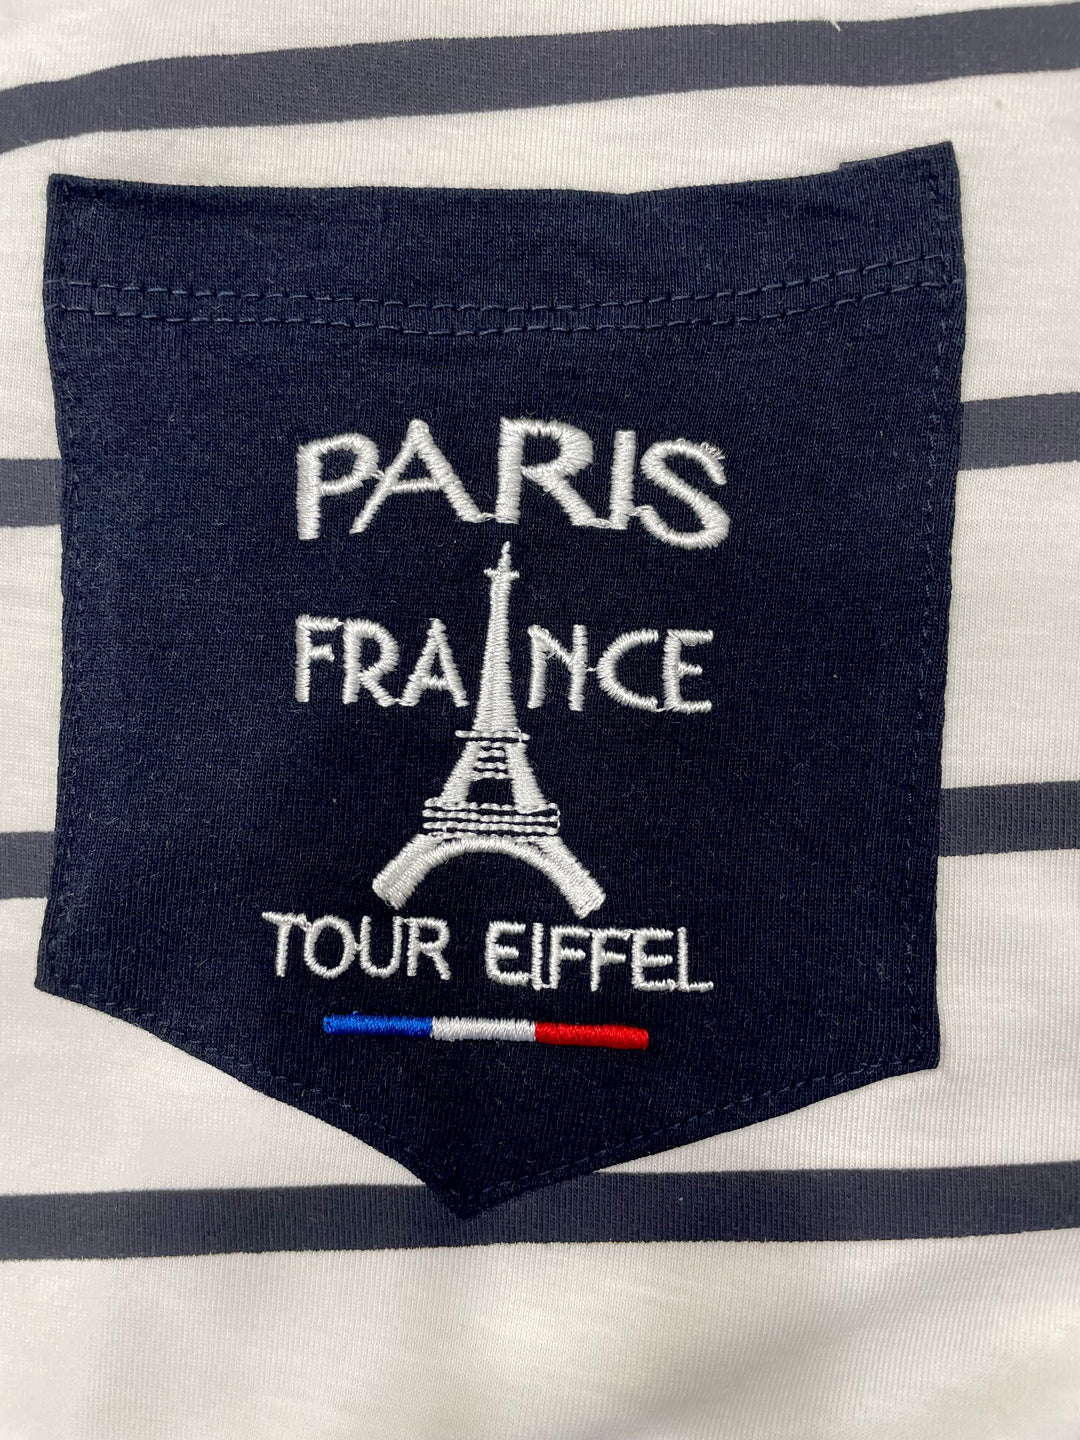 Camiseta bordada Torre Eiffel París Francia